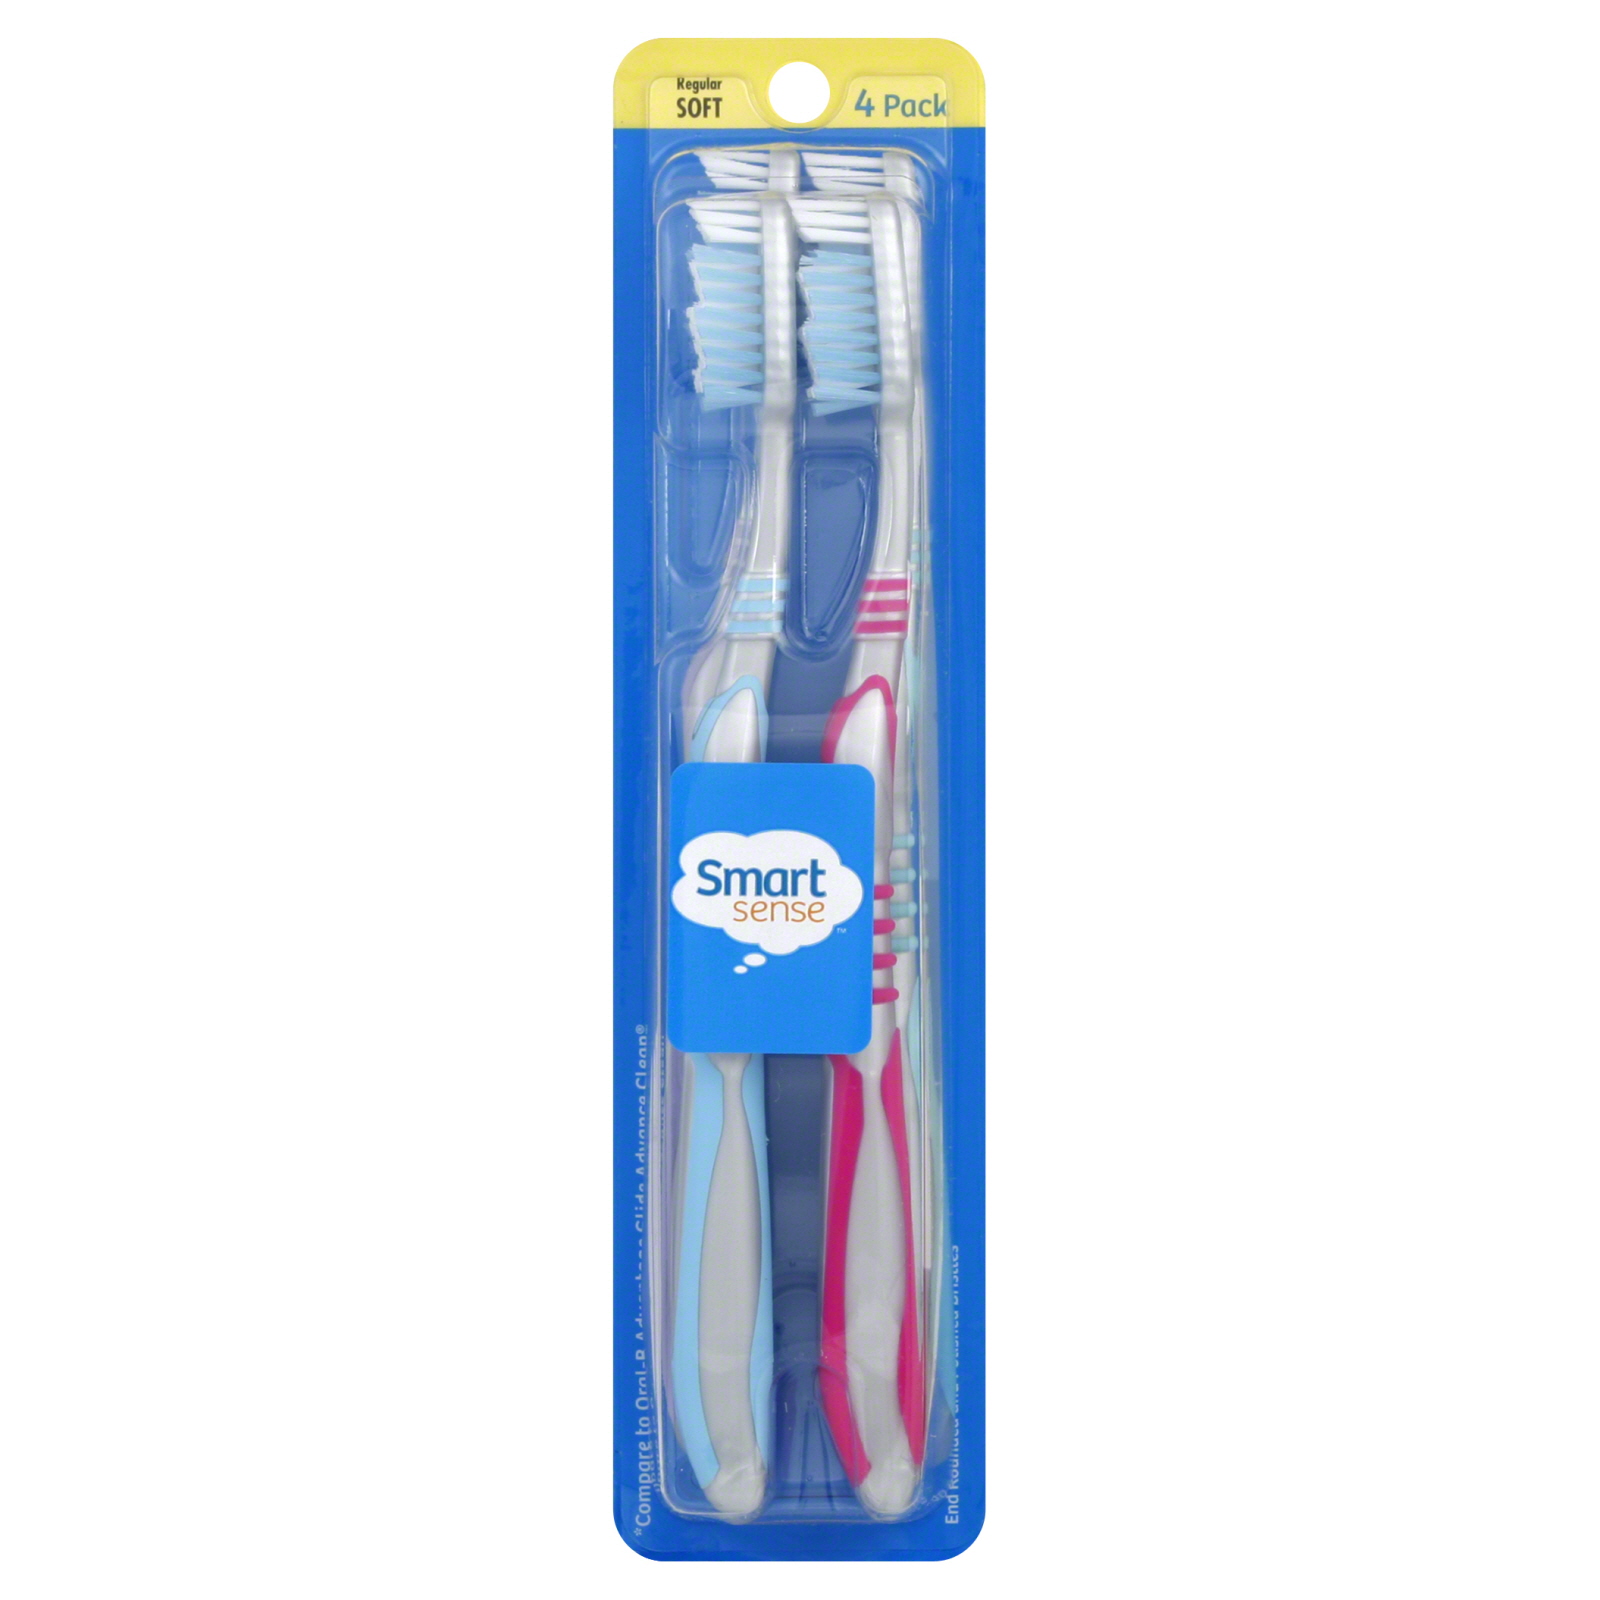 Smart Sense Toothbrushes, Regular, Soft, 4 Pack